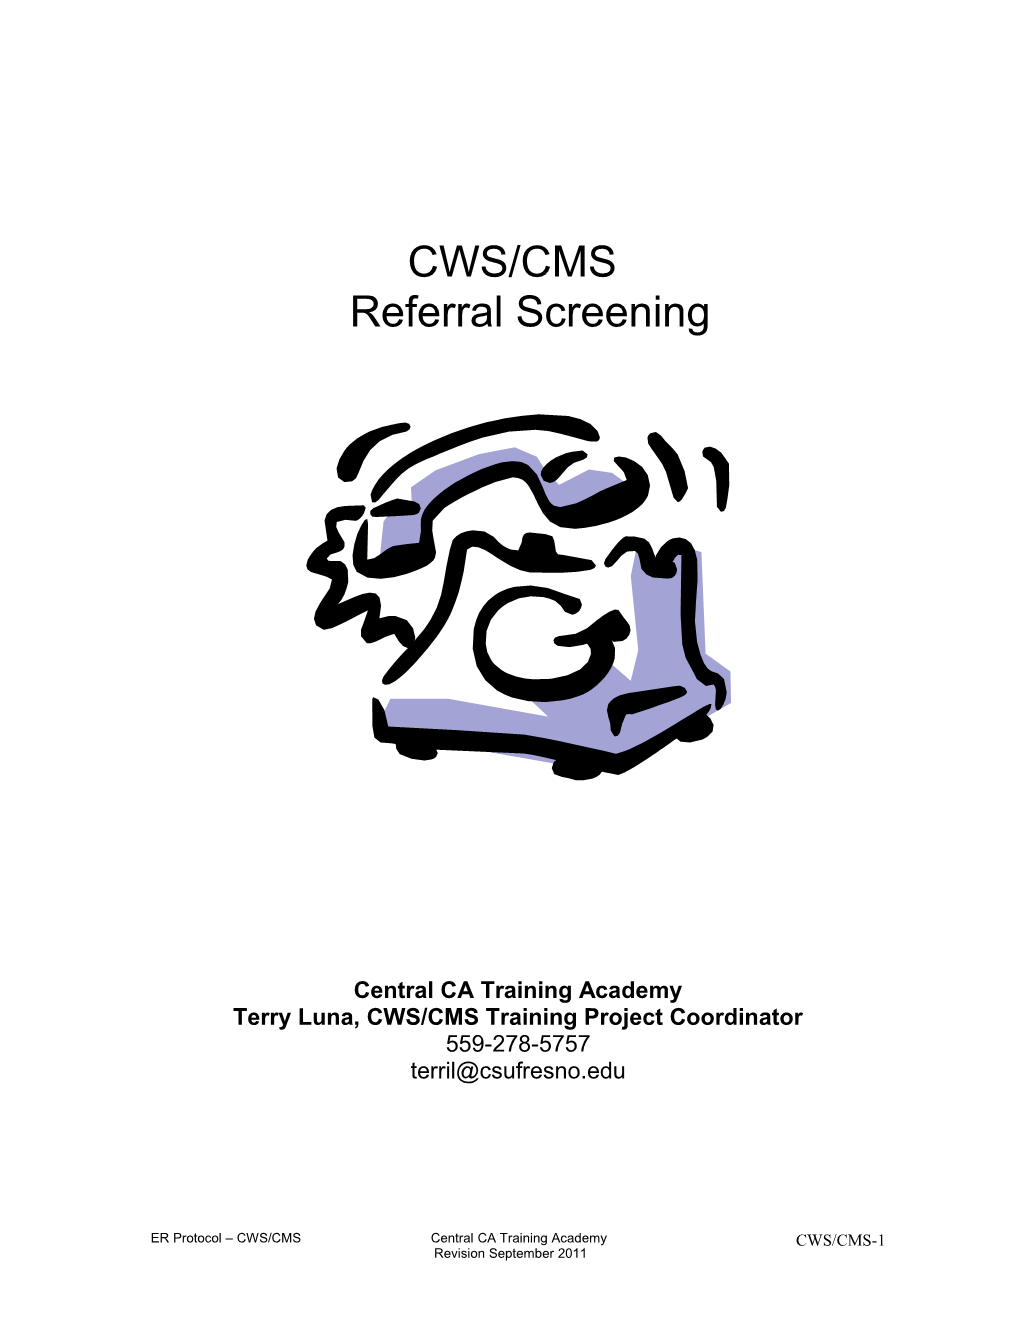 Referral Screening CWS/CMS